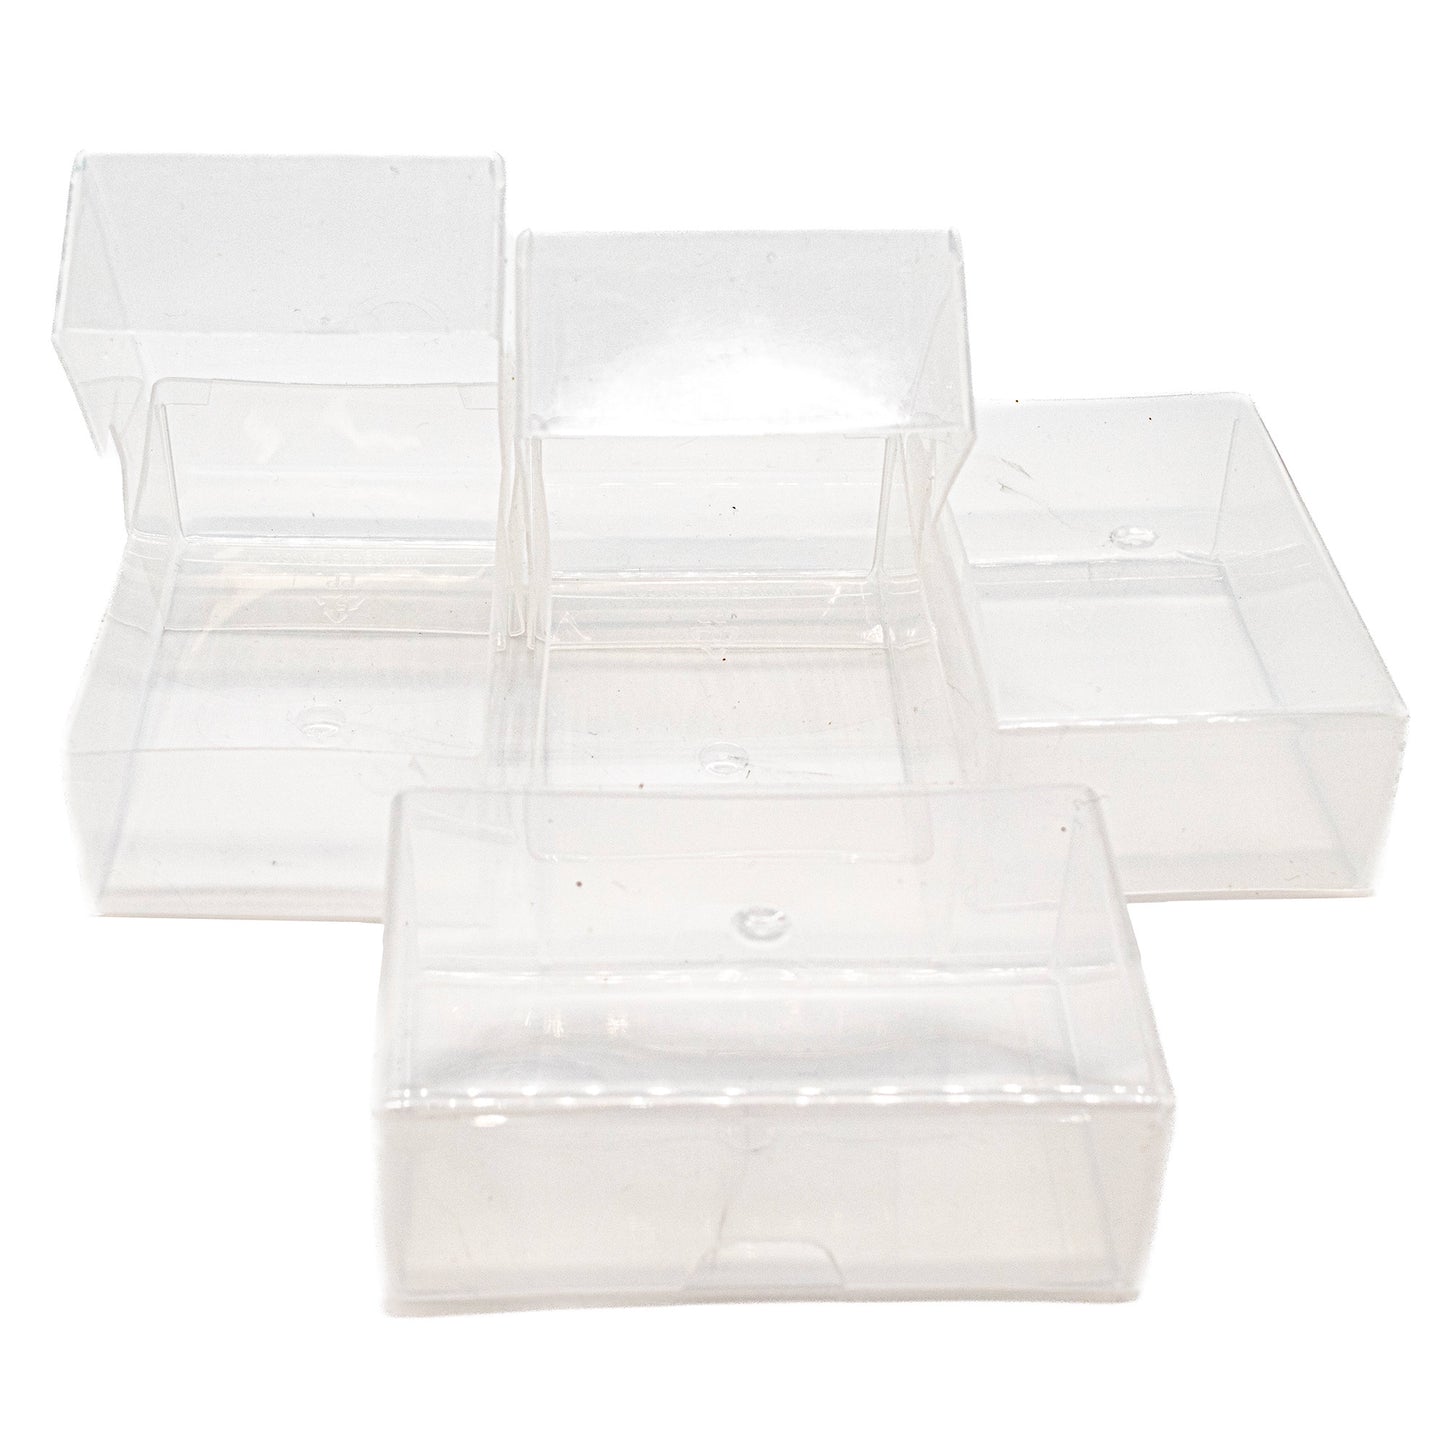 Plastic Storage Box Small Pk 4 - Default (BOXSM4)